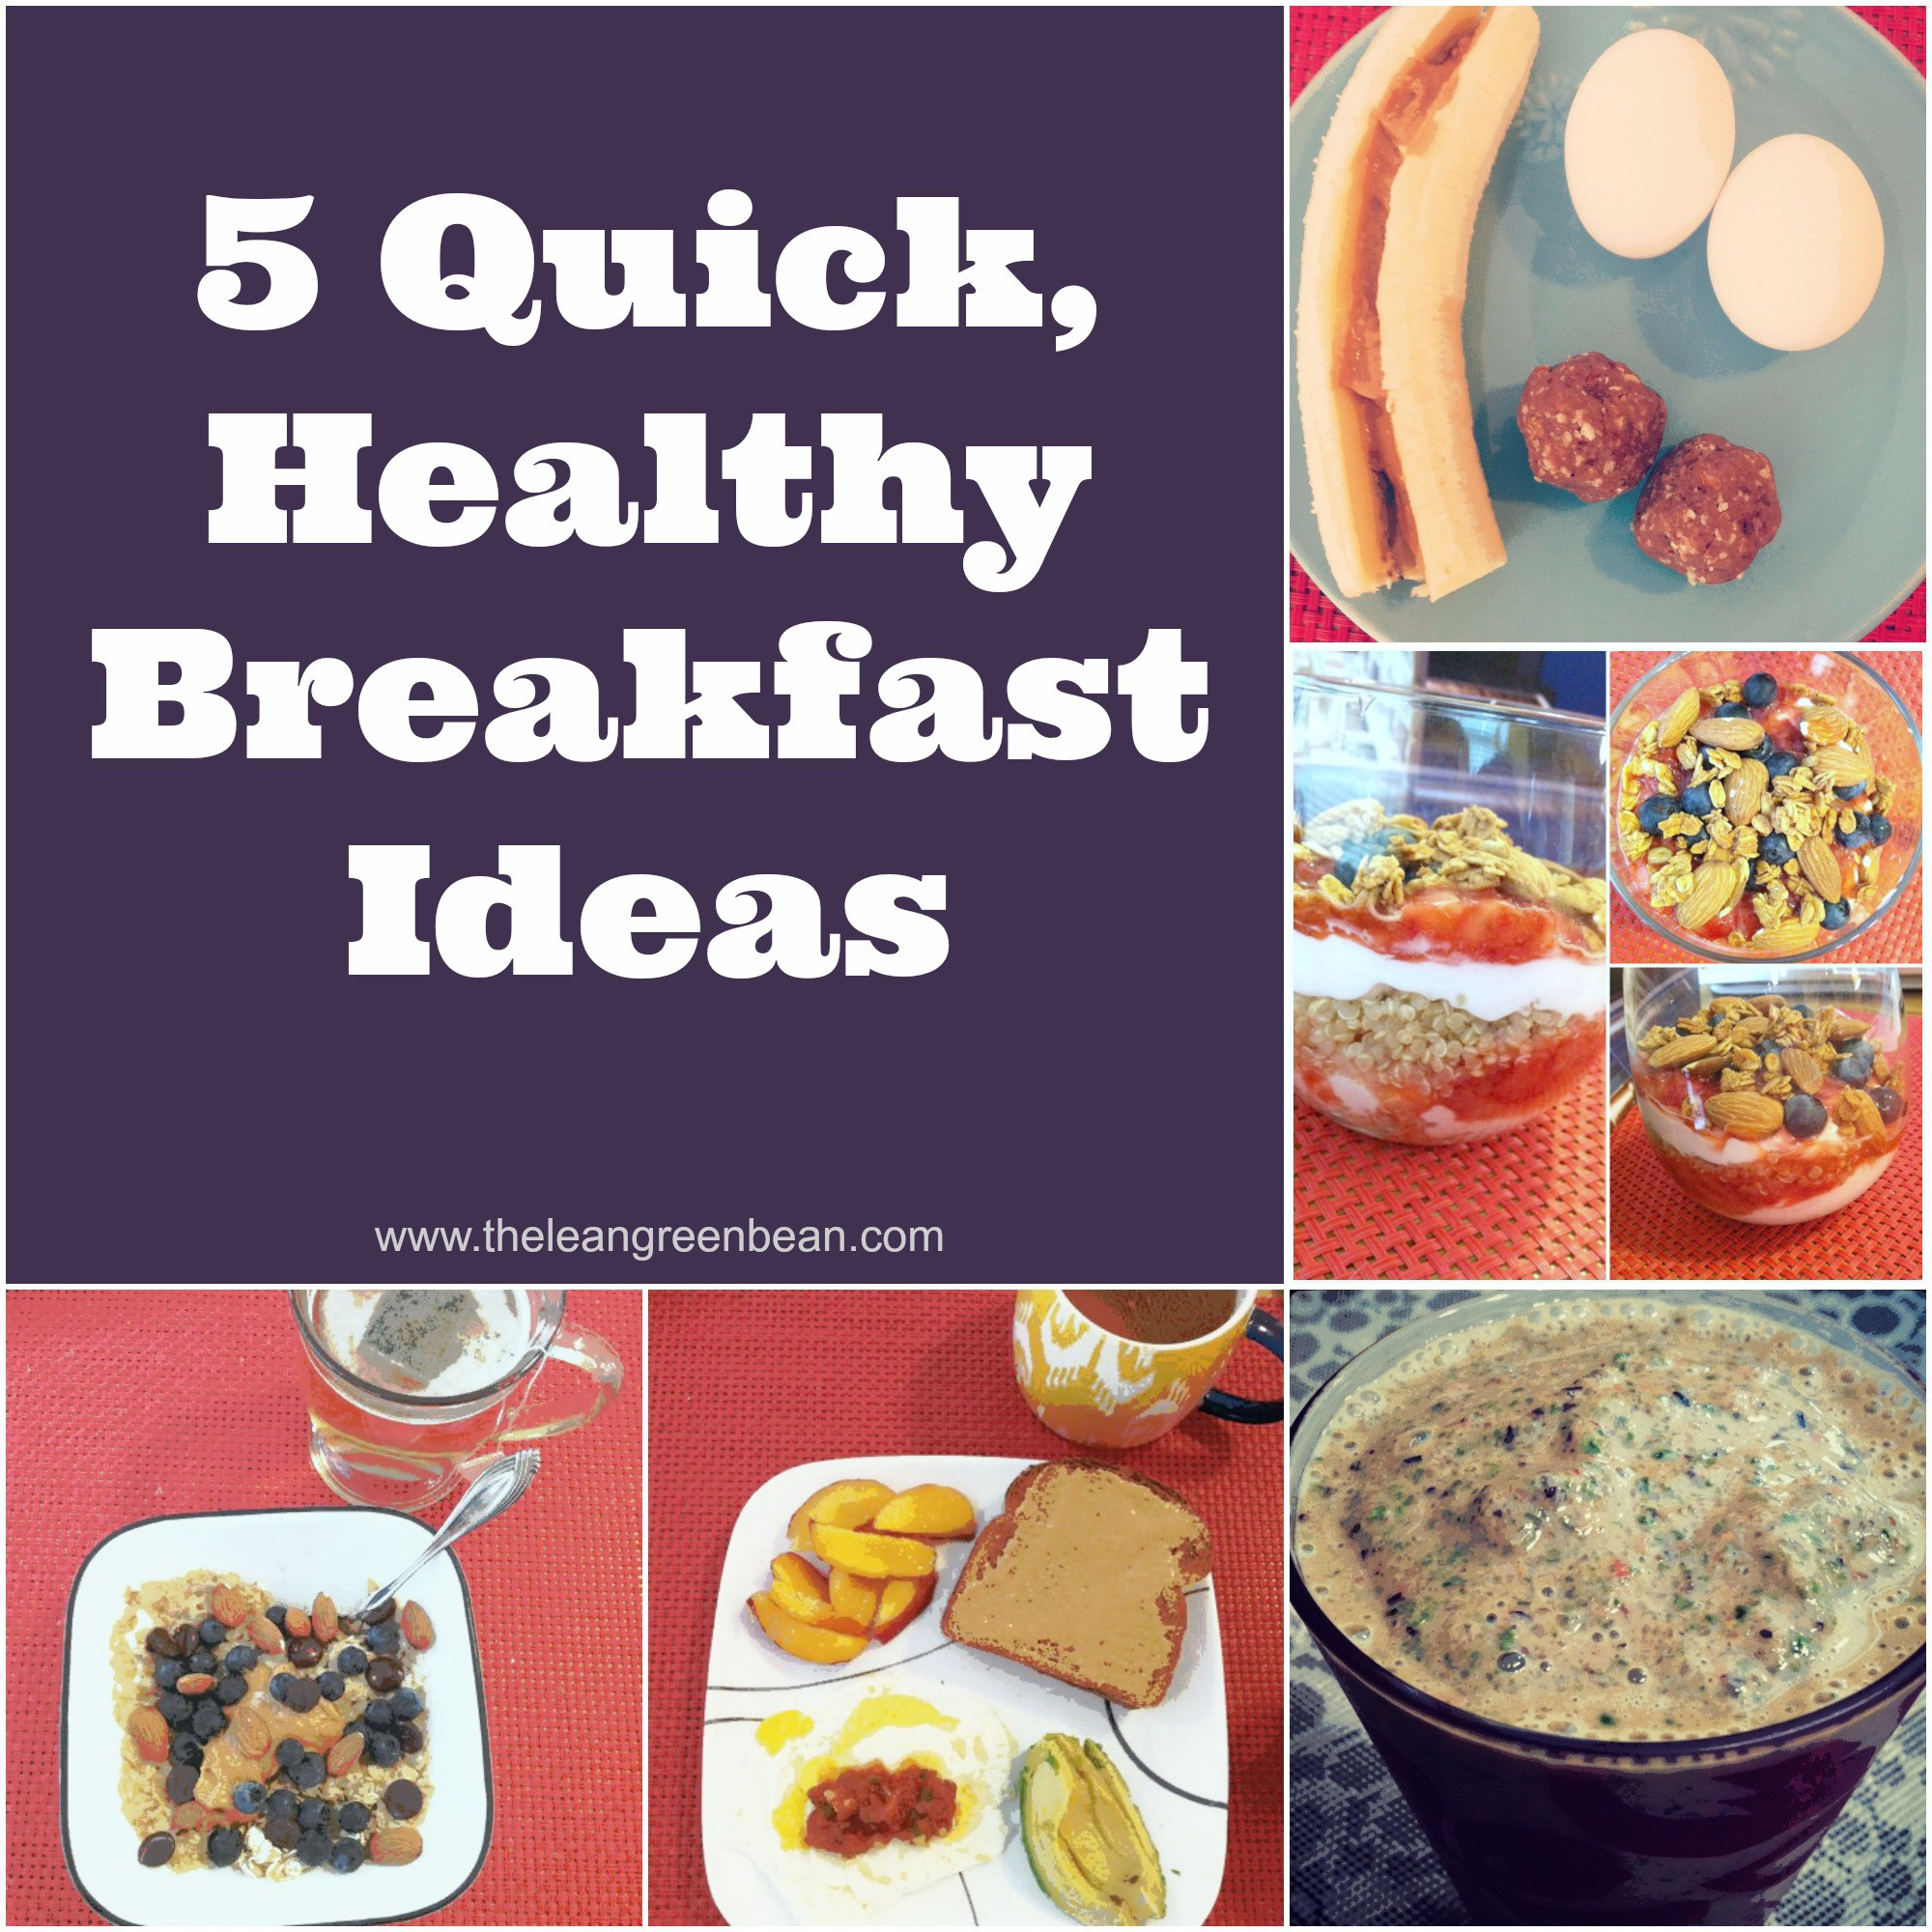 Best Quick Healthy Breakfast 20 Of the Best Ideas for 5 Quick Healthy Breakfast Ideas From A Registered Dietitian